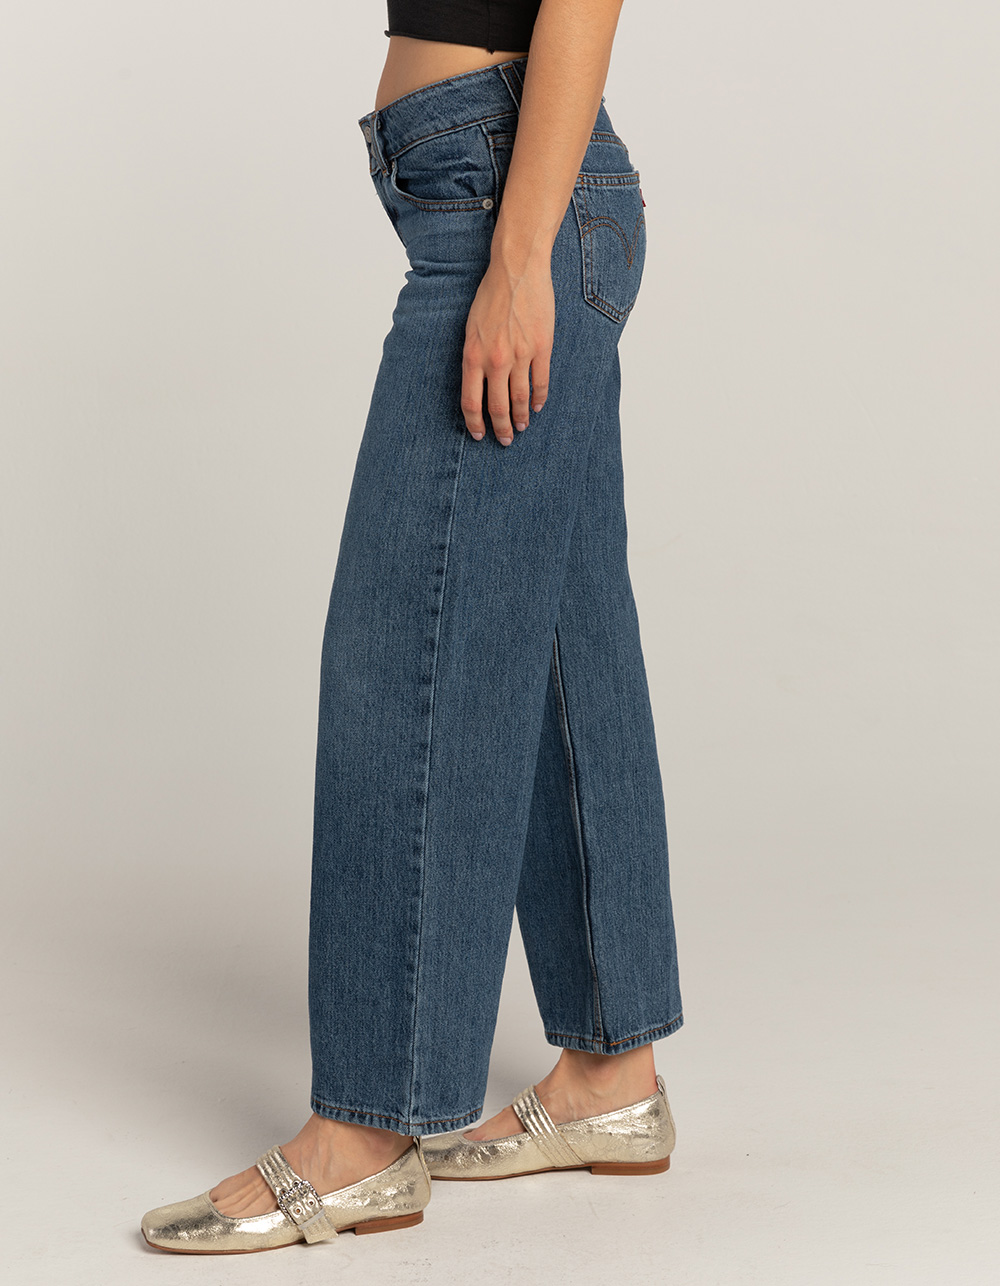 LEVI'S Superlow Loose Womens Jeans - It's A Vibe - VINTAGE MED